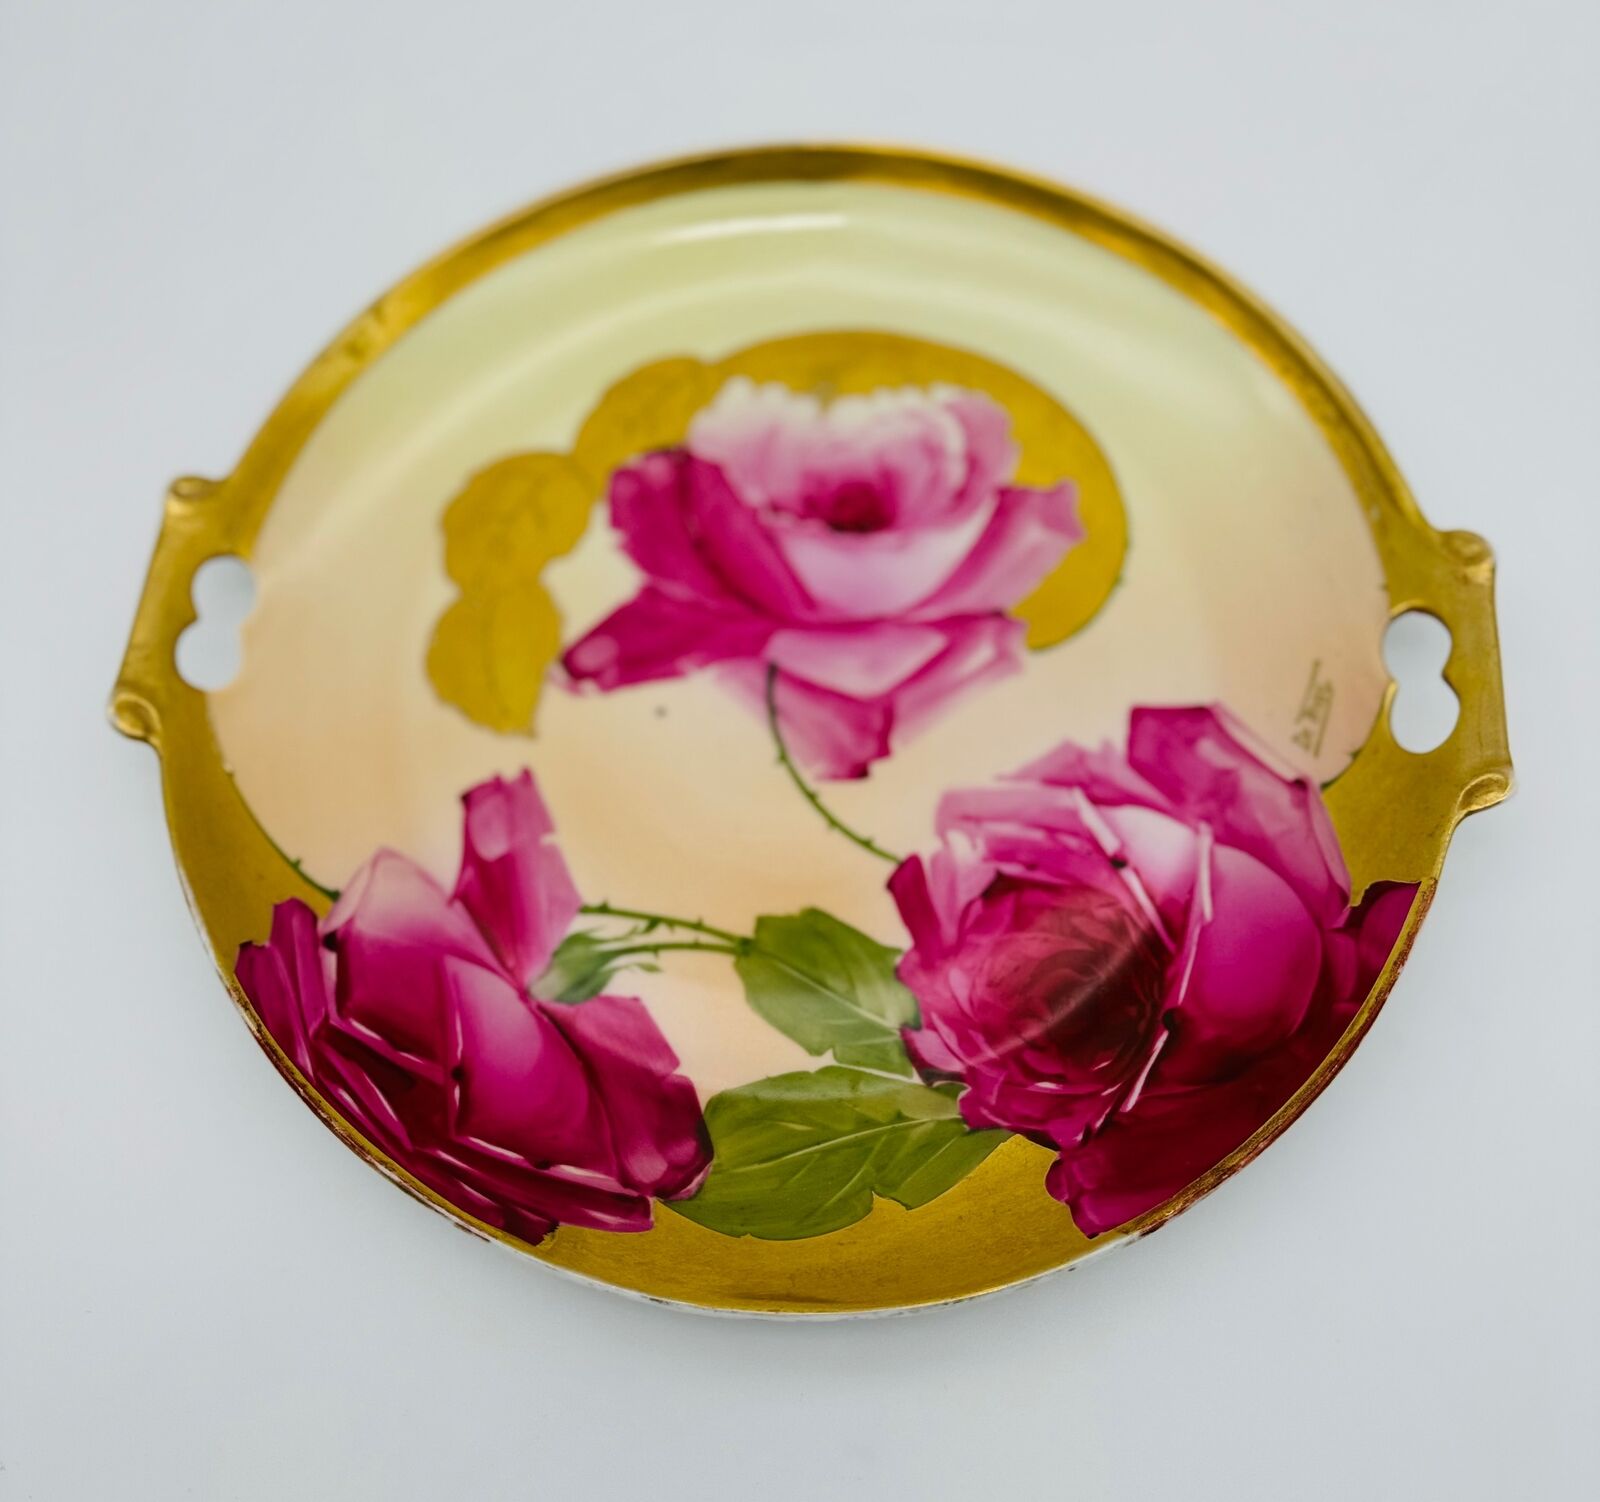 Antique Imperial Austria Hand-Painted Pink Roses Plate Gold Trim Signed De Vries